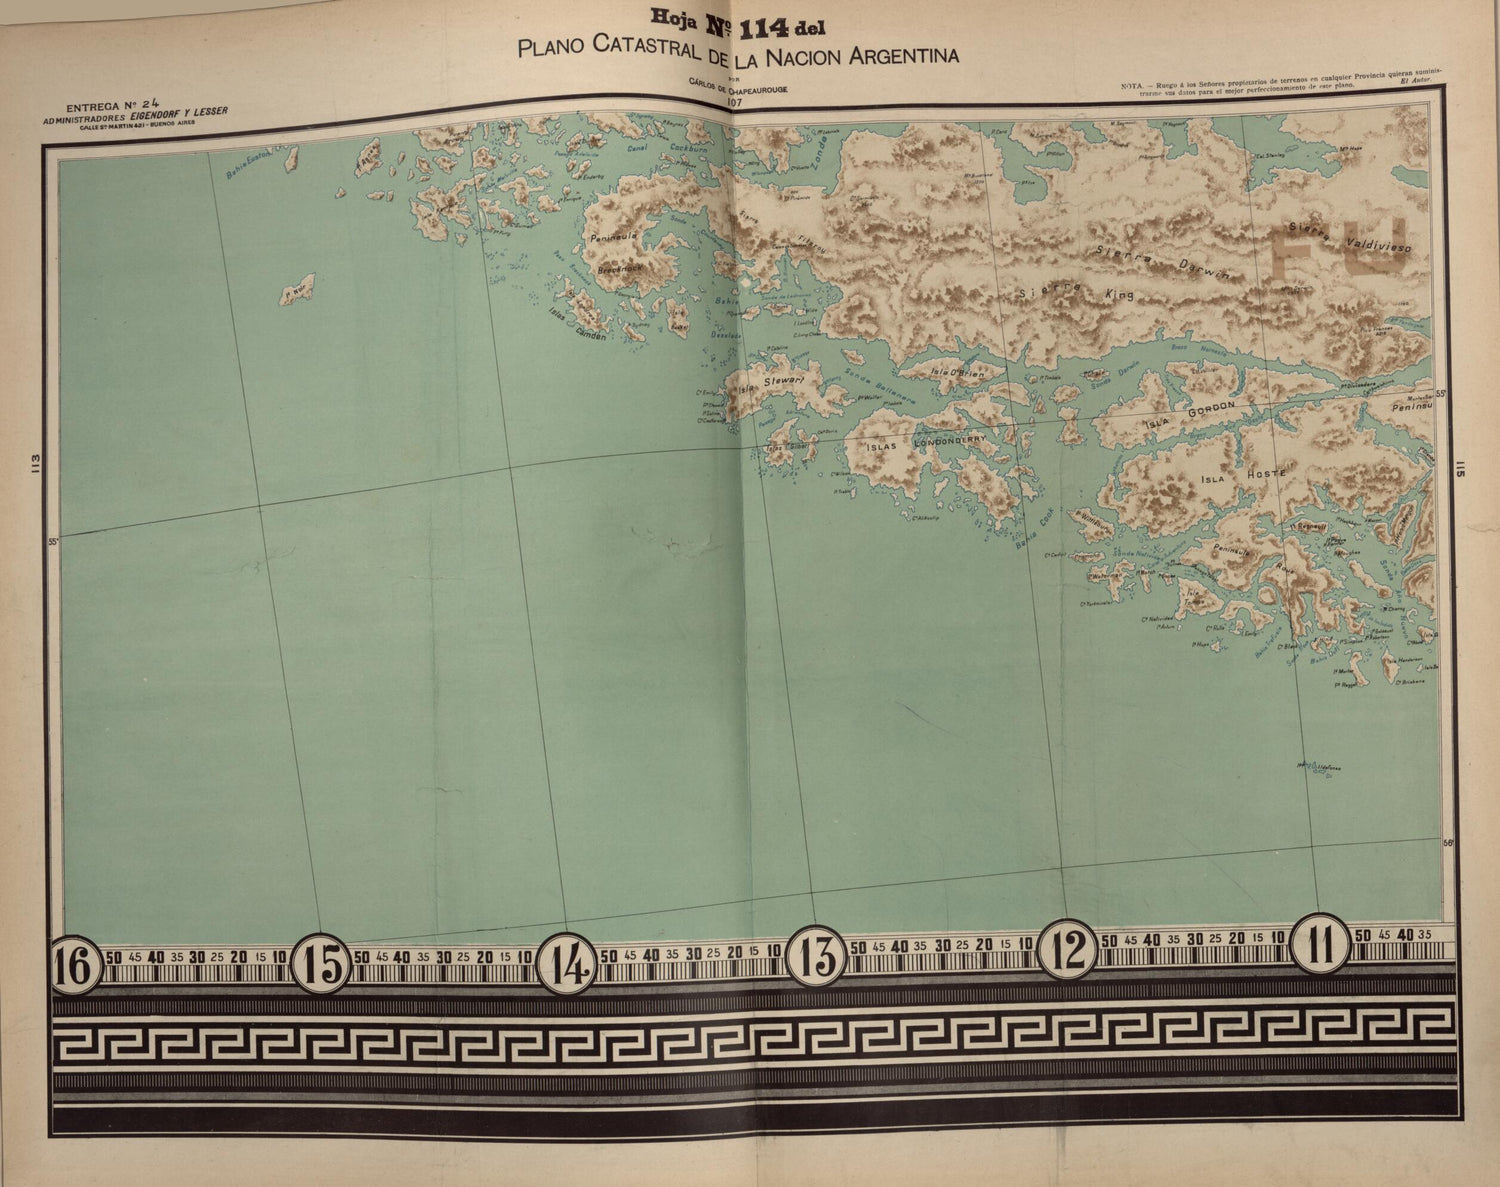 This old map of Plano Catastral De La Nacion Hoja No. 114 from República Argentina from 1905 was created by Carlos De Chapeaurouge in 1905